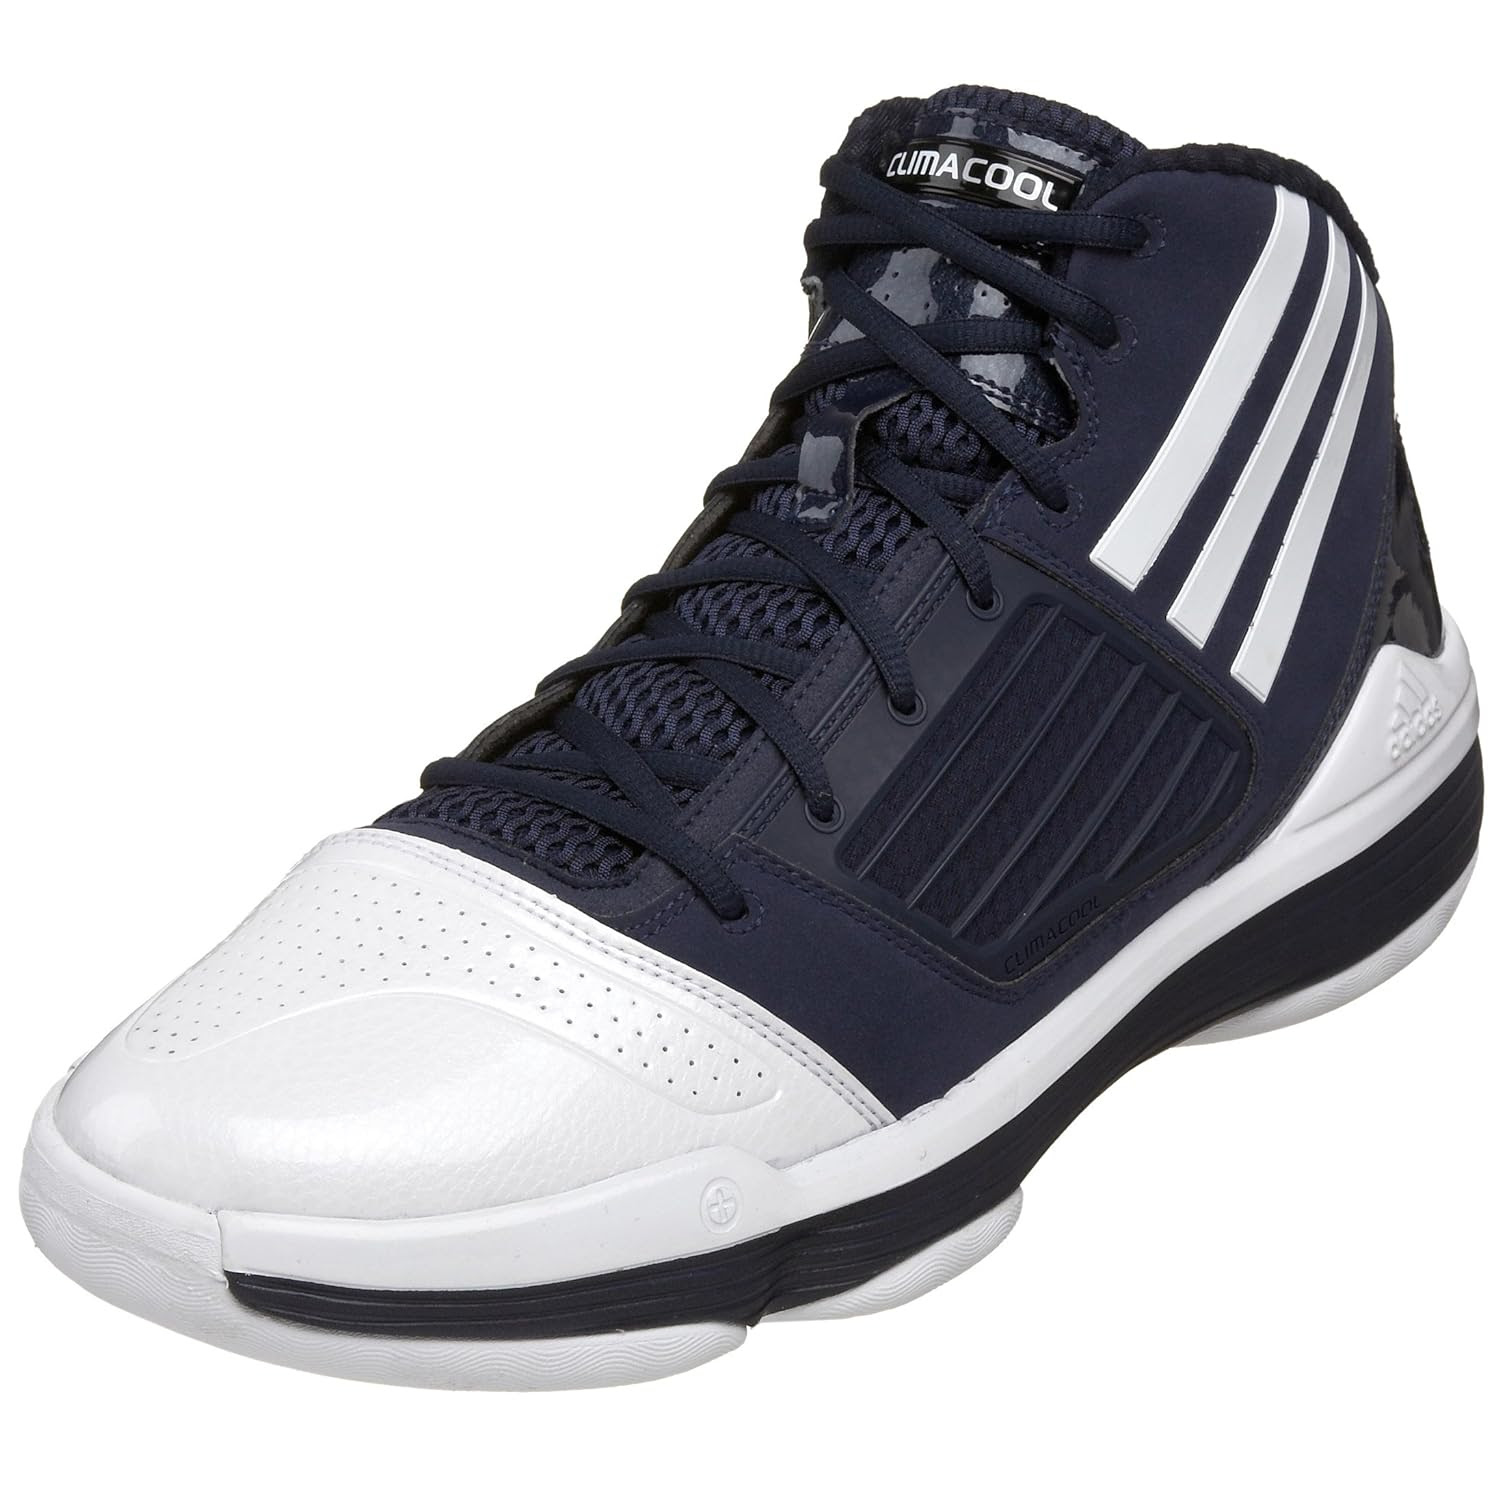 Derrick Rose Basketball Shoes: Adidas Adizero 2.0 Derrick Rose Size 13 ...